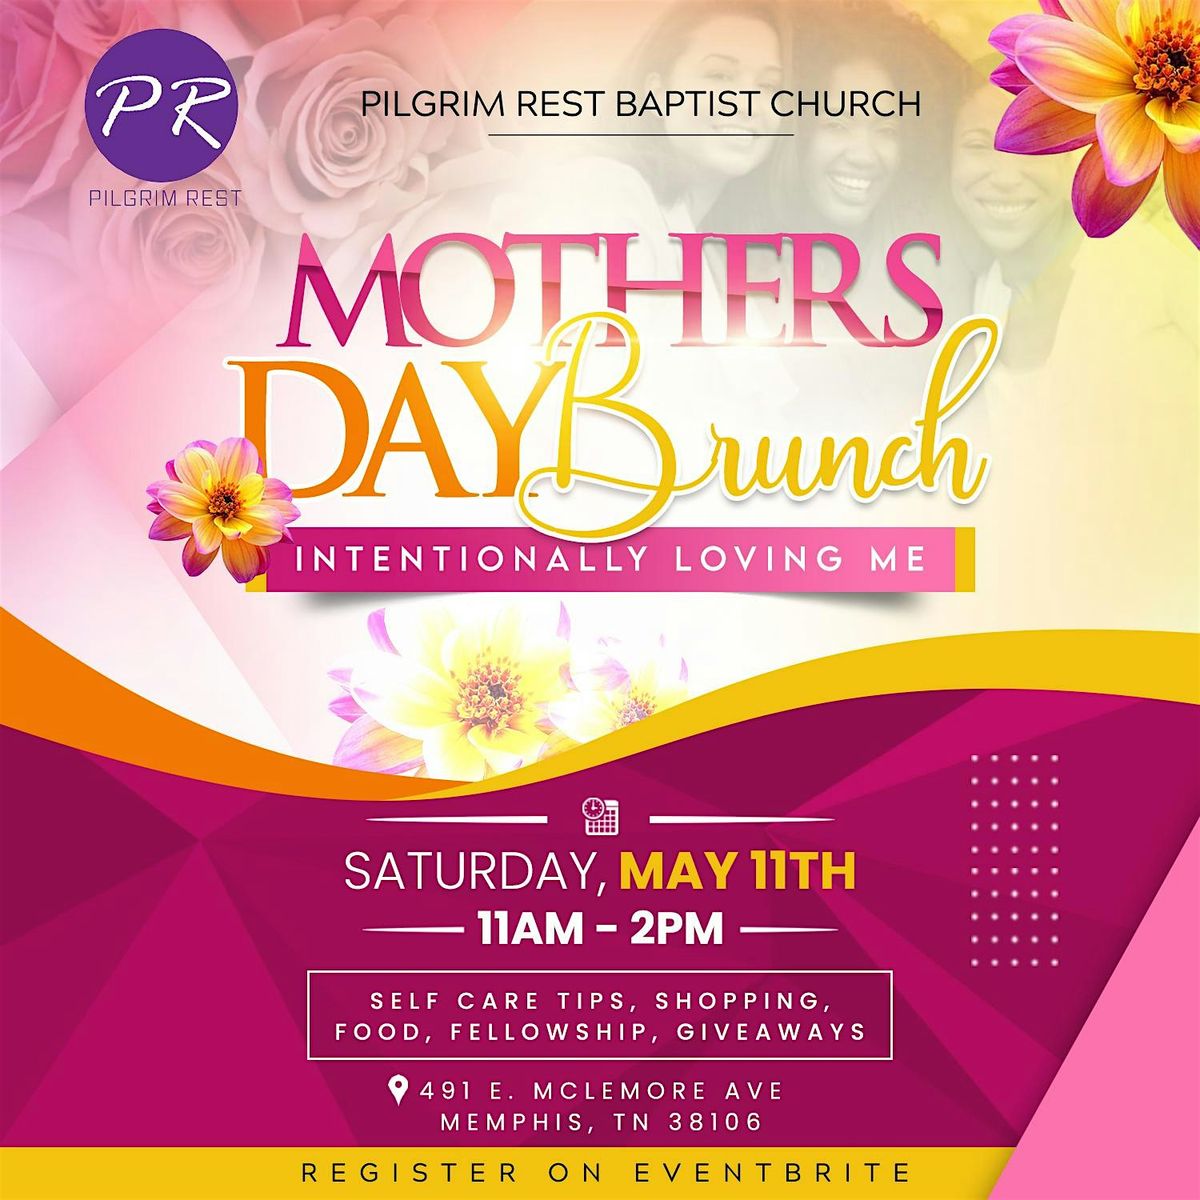 Pilgrim Rest Baptist Church Mother's Day Brunch